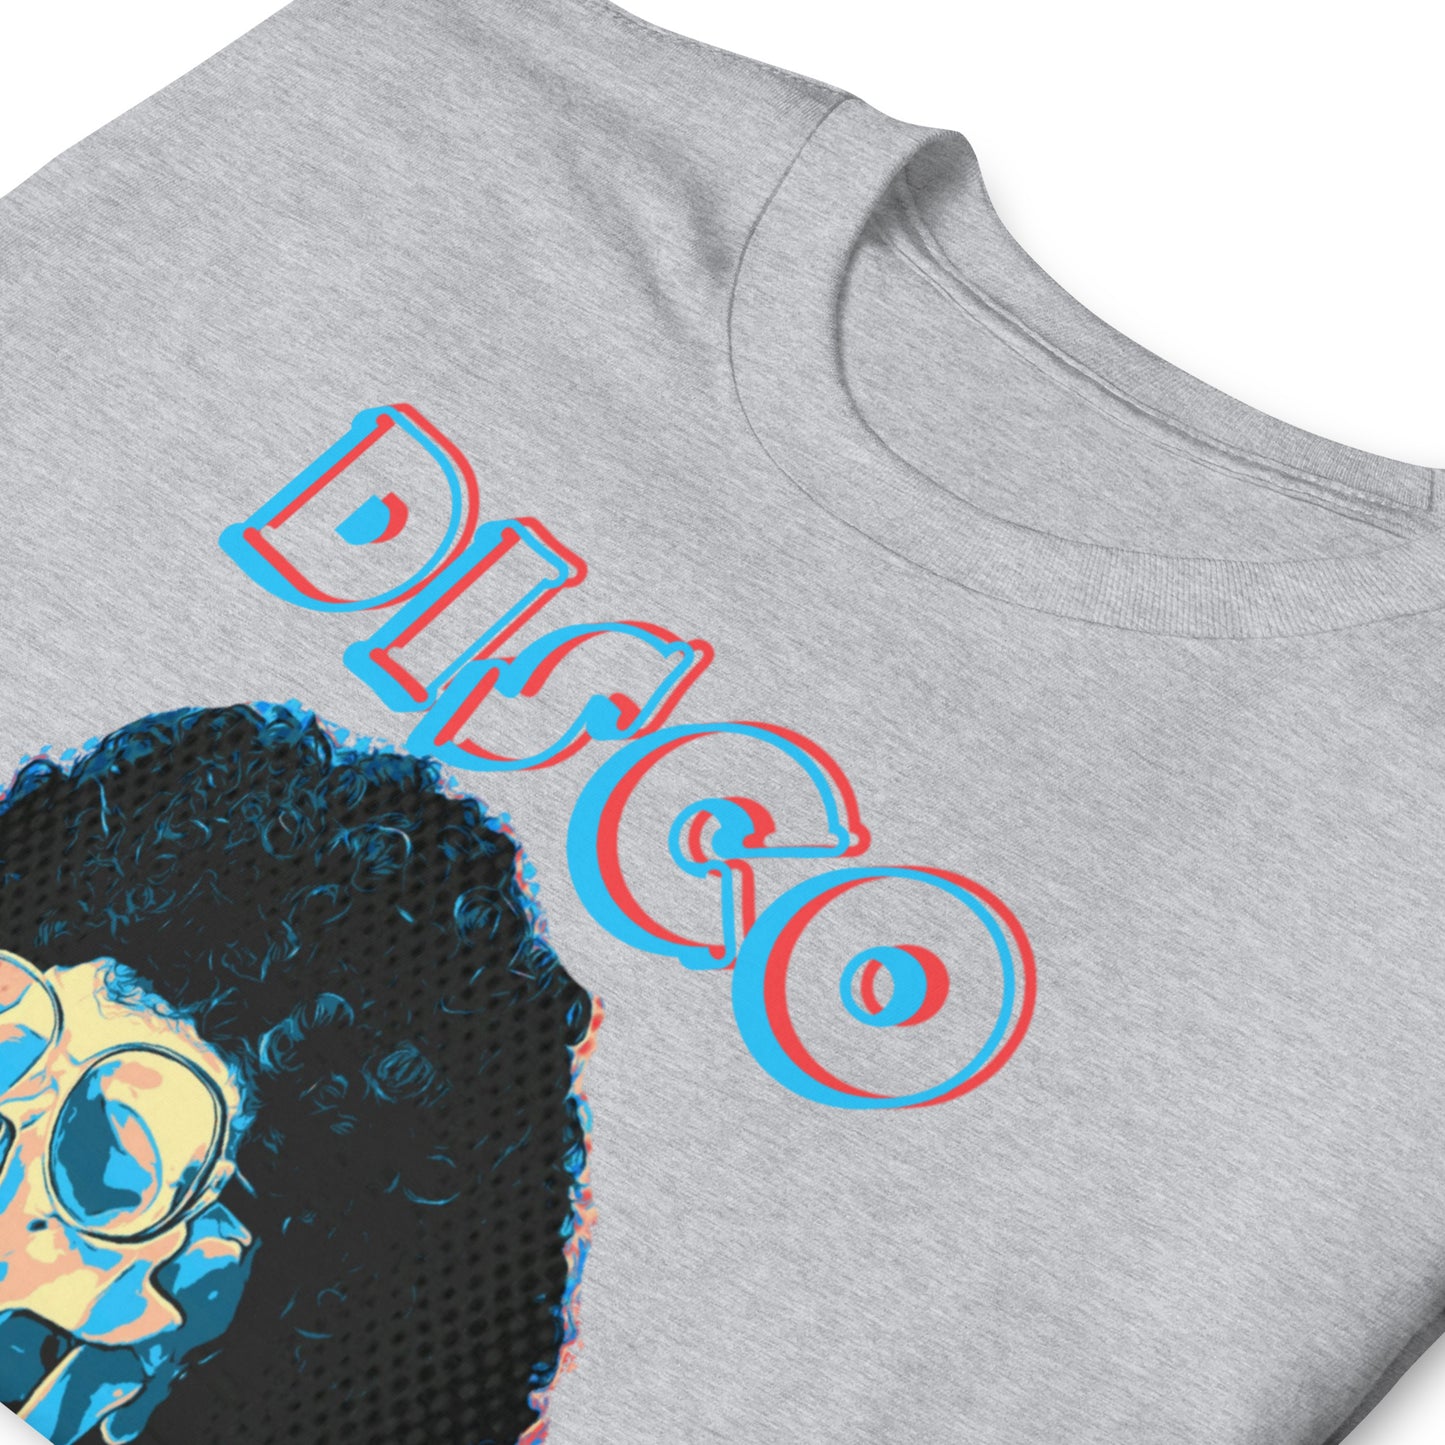 Disco isnt dead T-Shirt